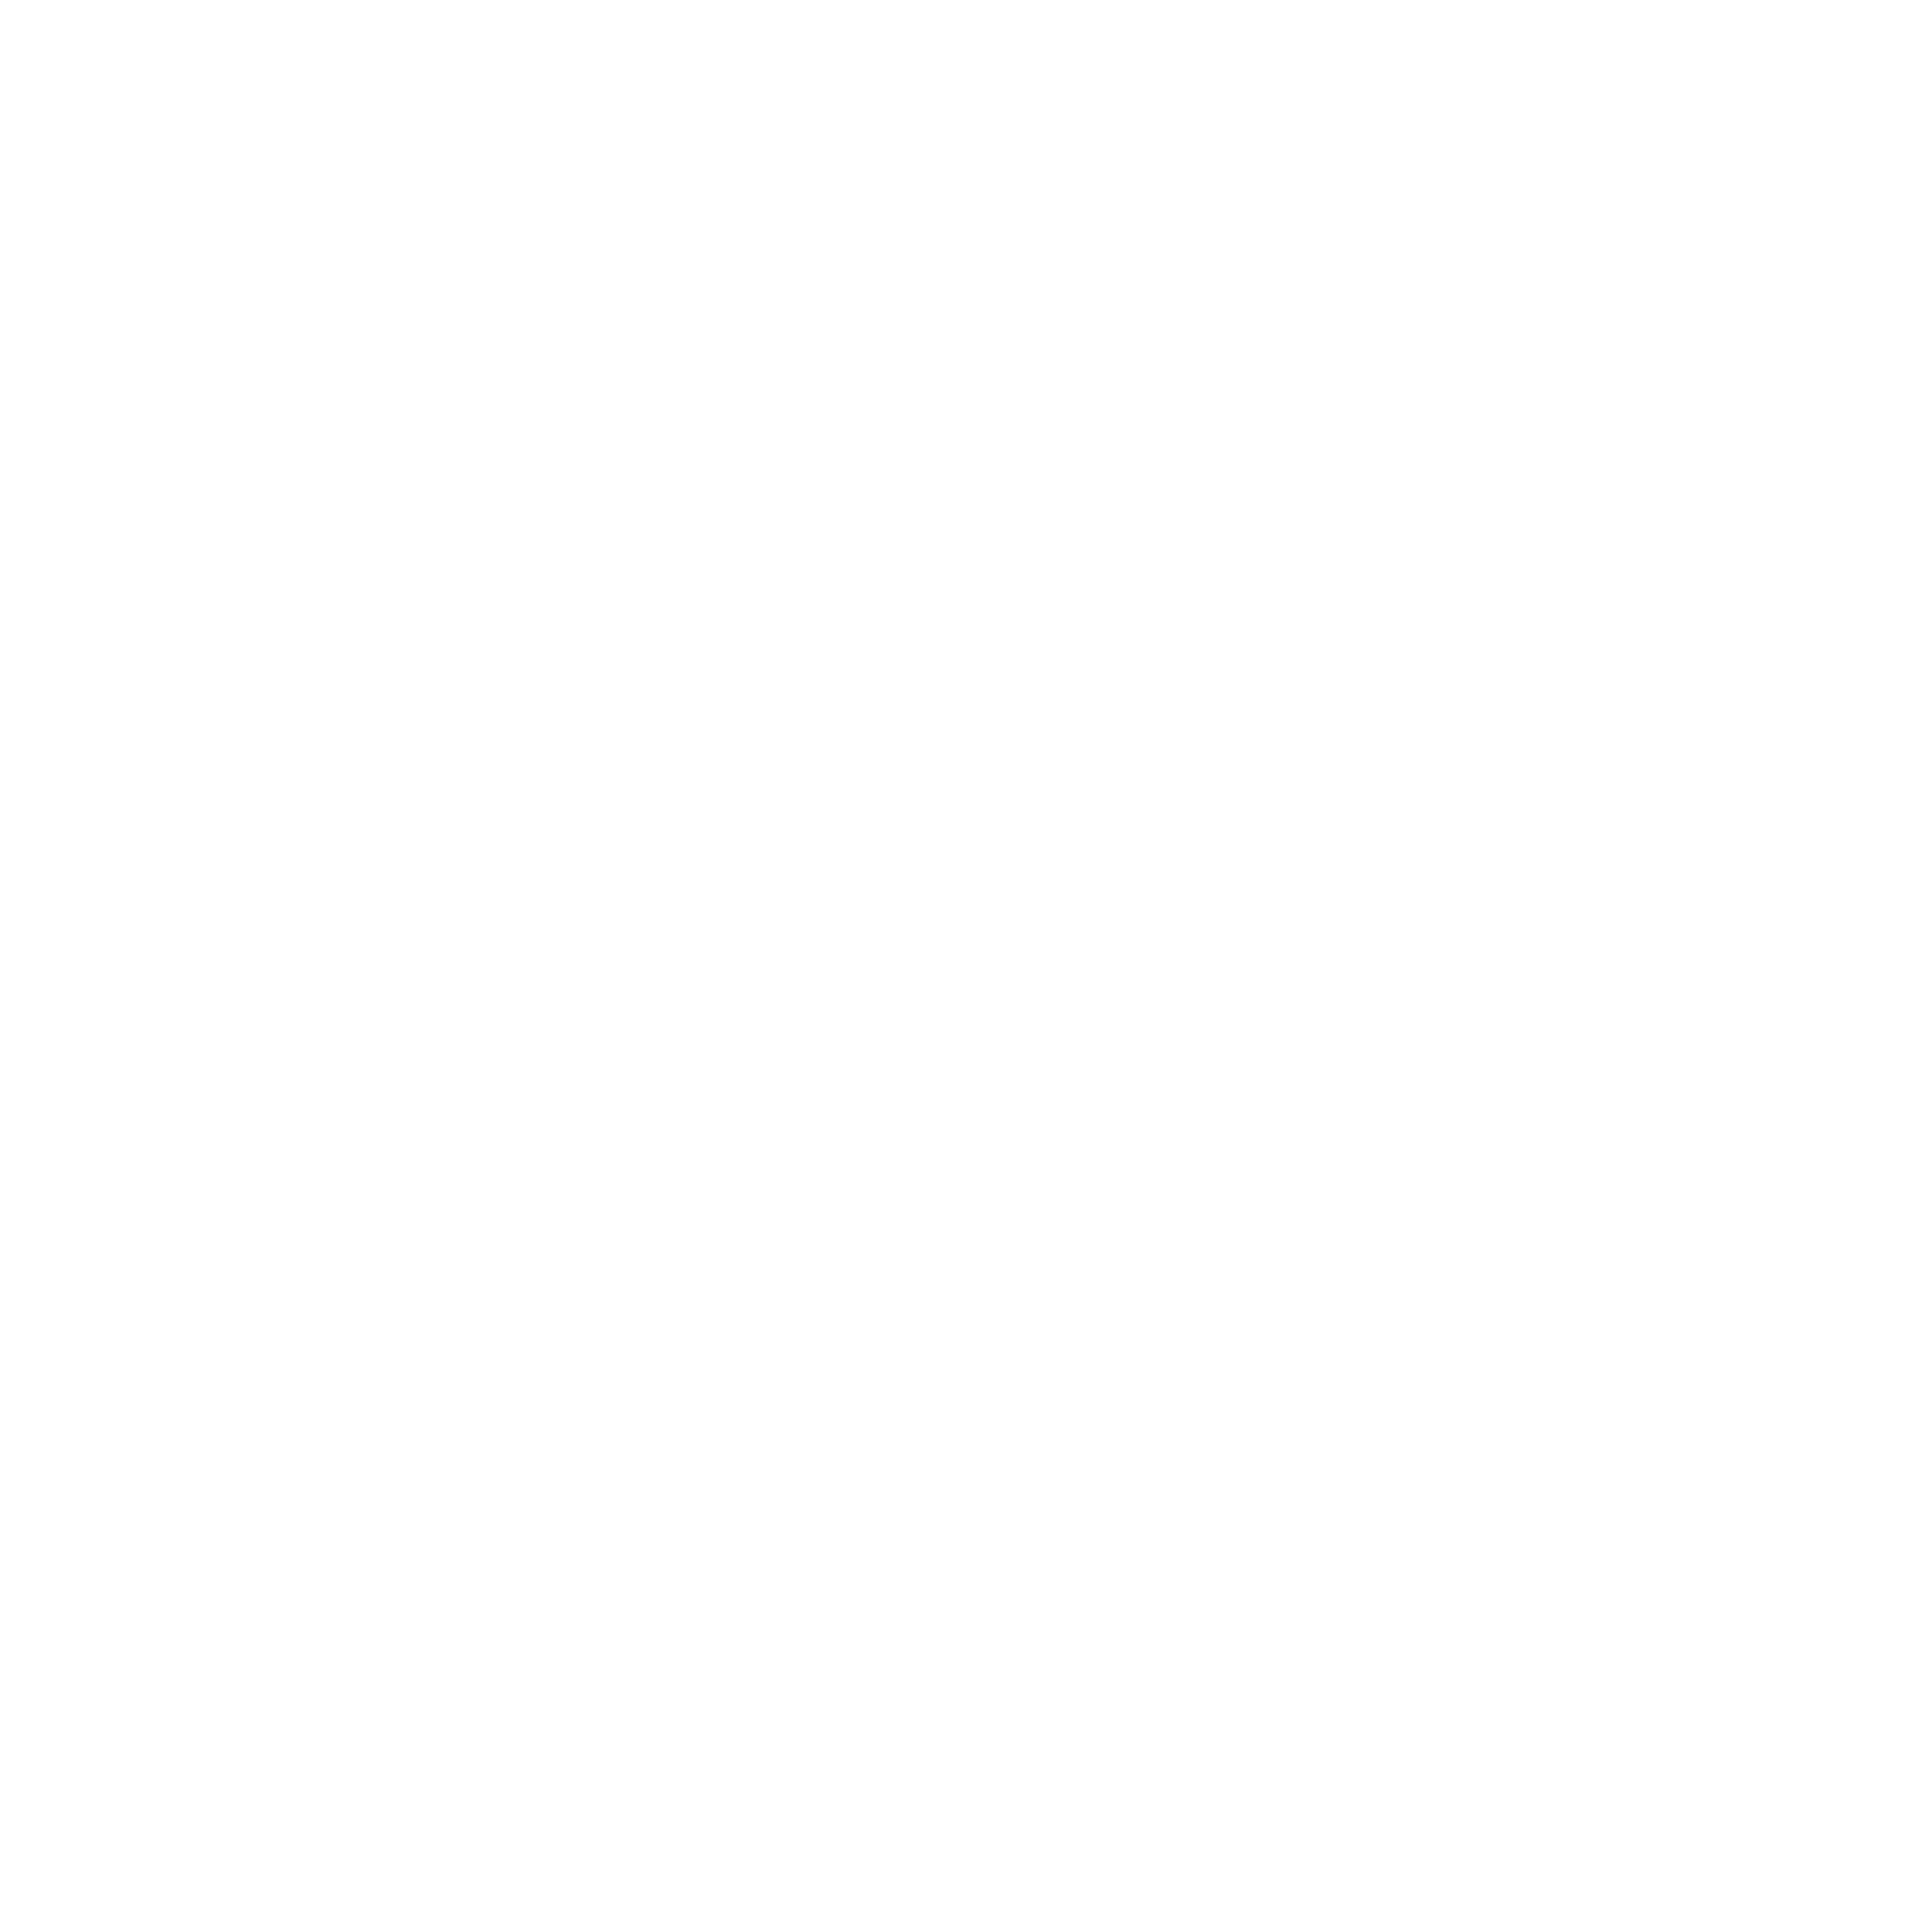 BIOSEN Group